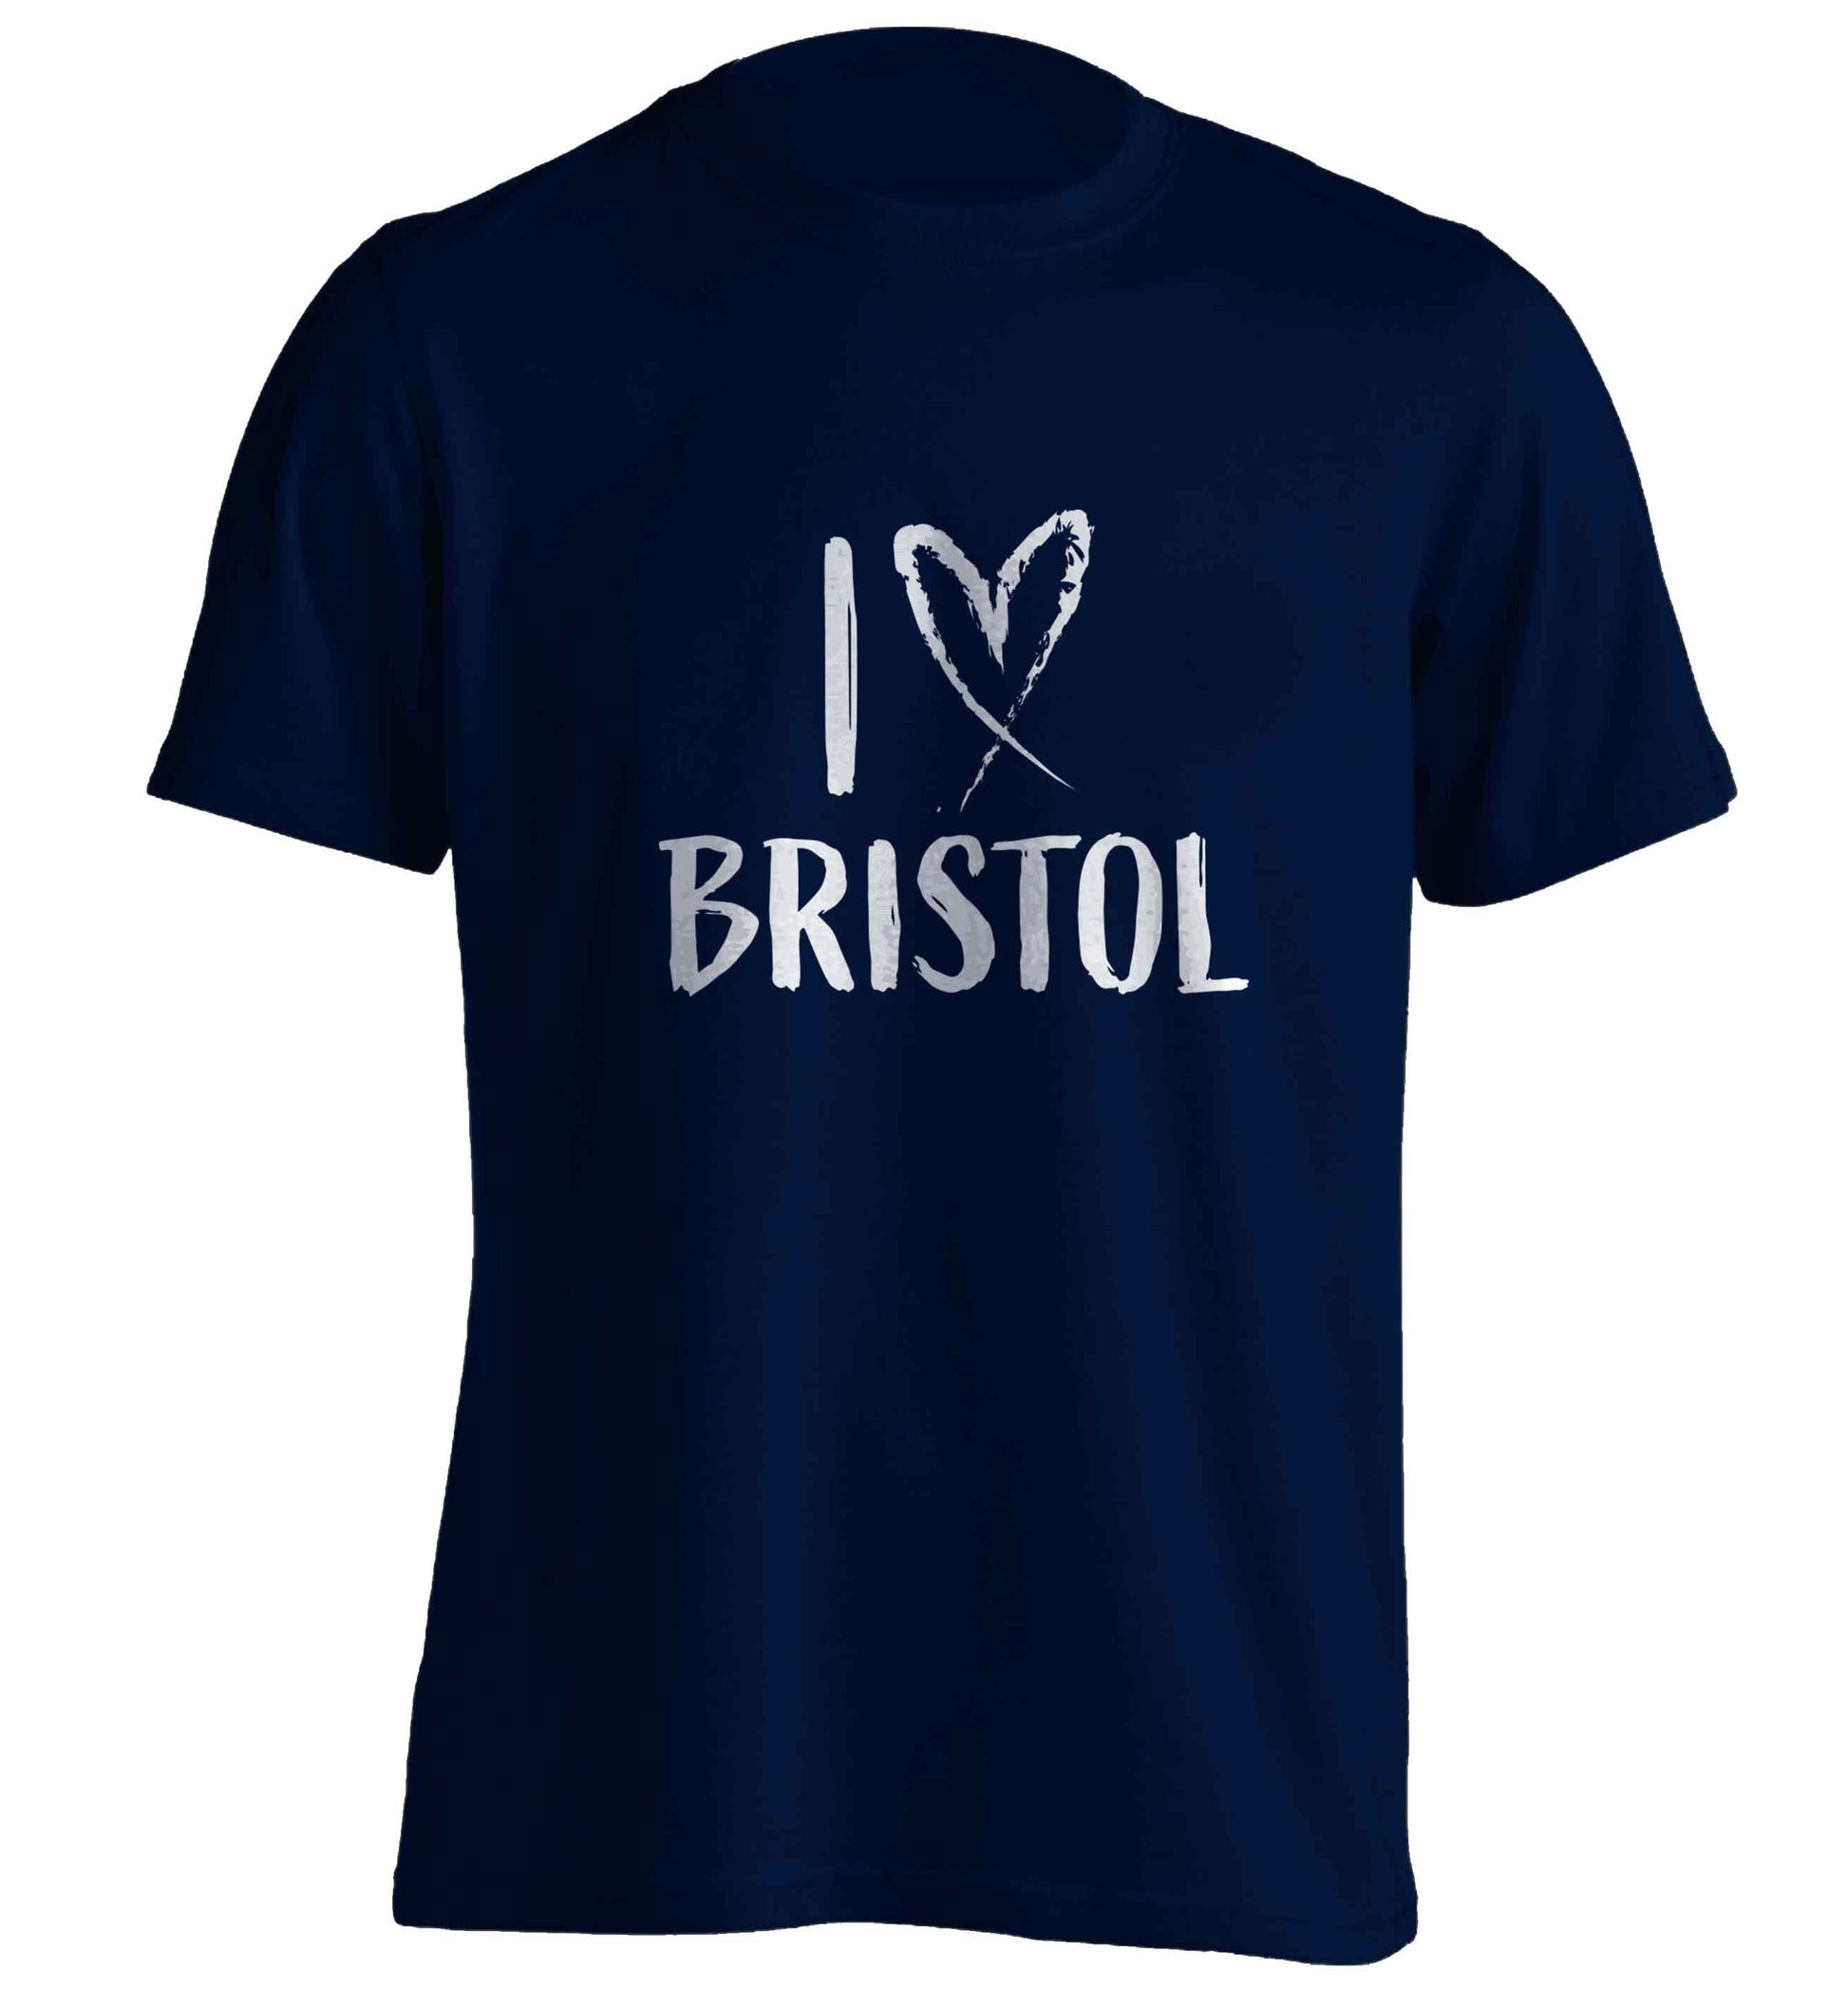 I love Bristol adults unisex navy Tshirt 2XL